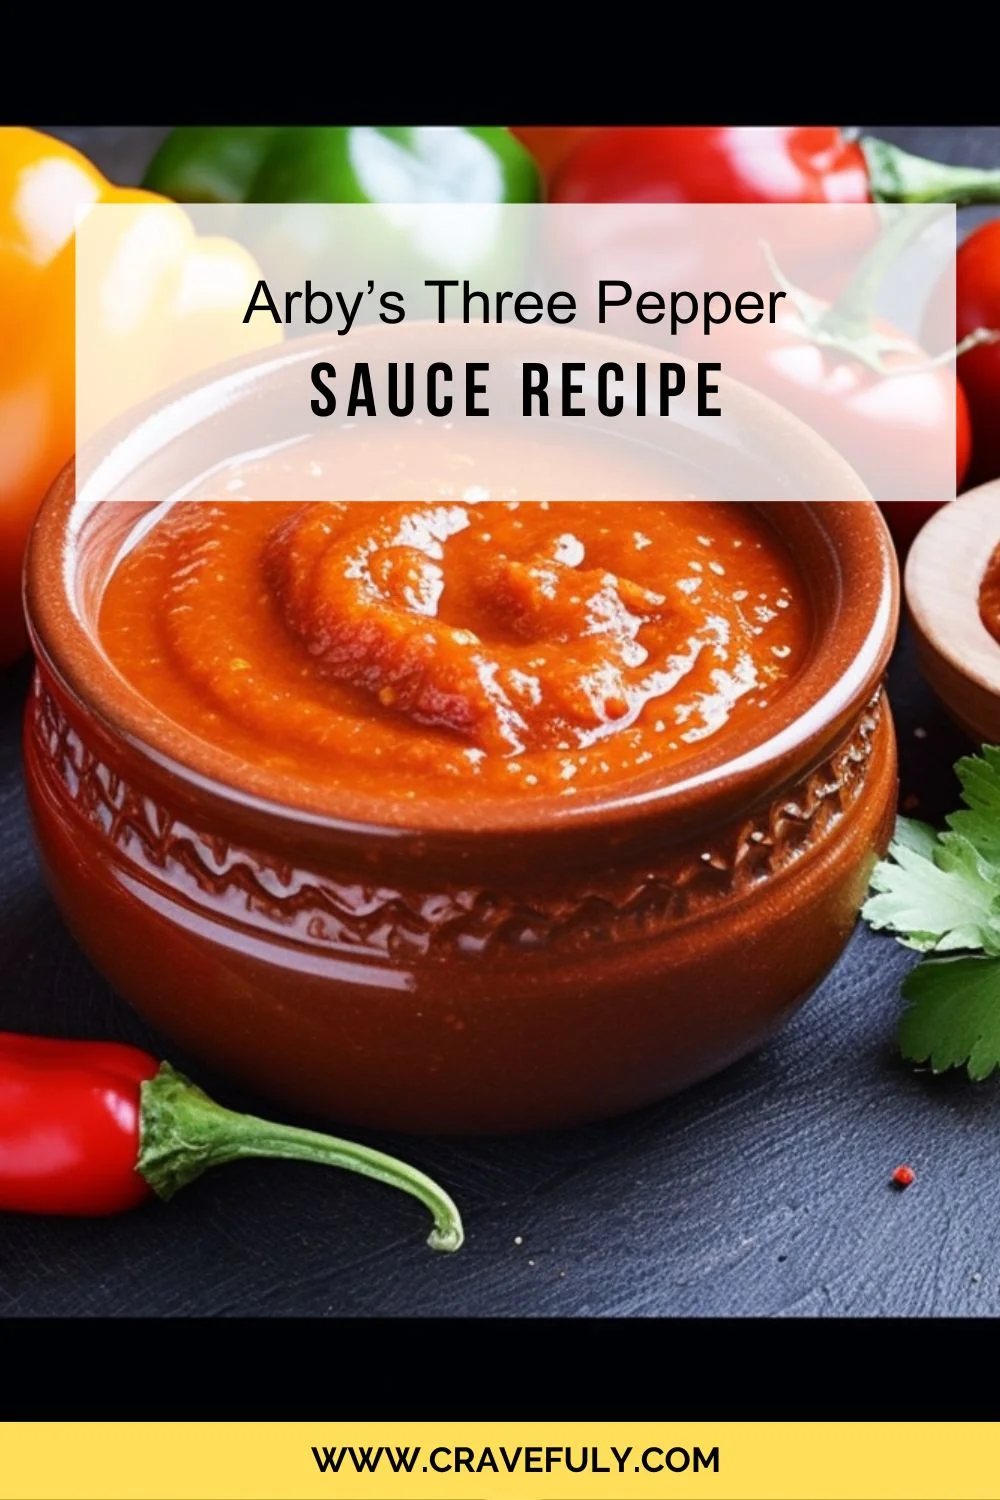 Arby’s Three Pepper Sauce Recipe